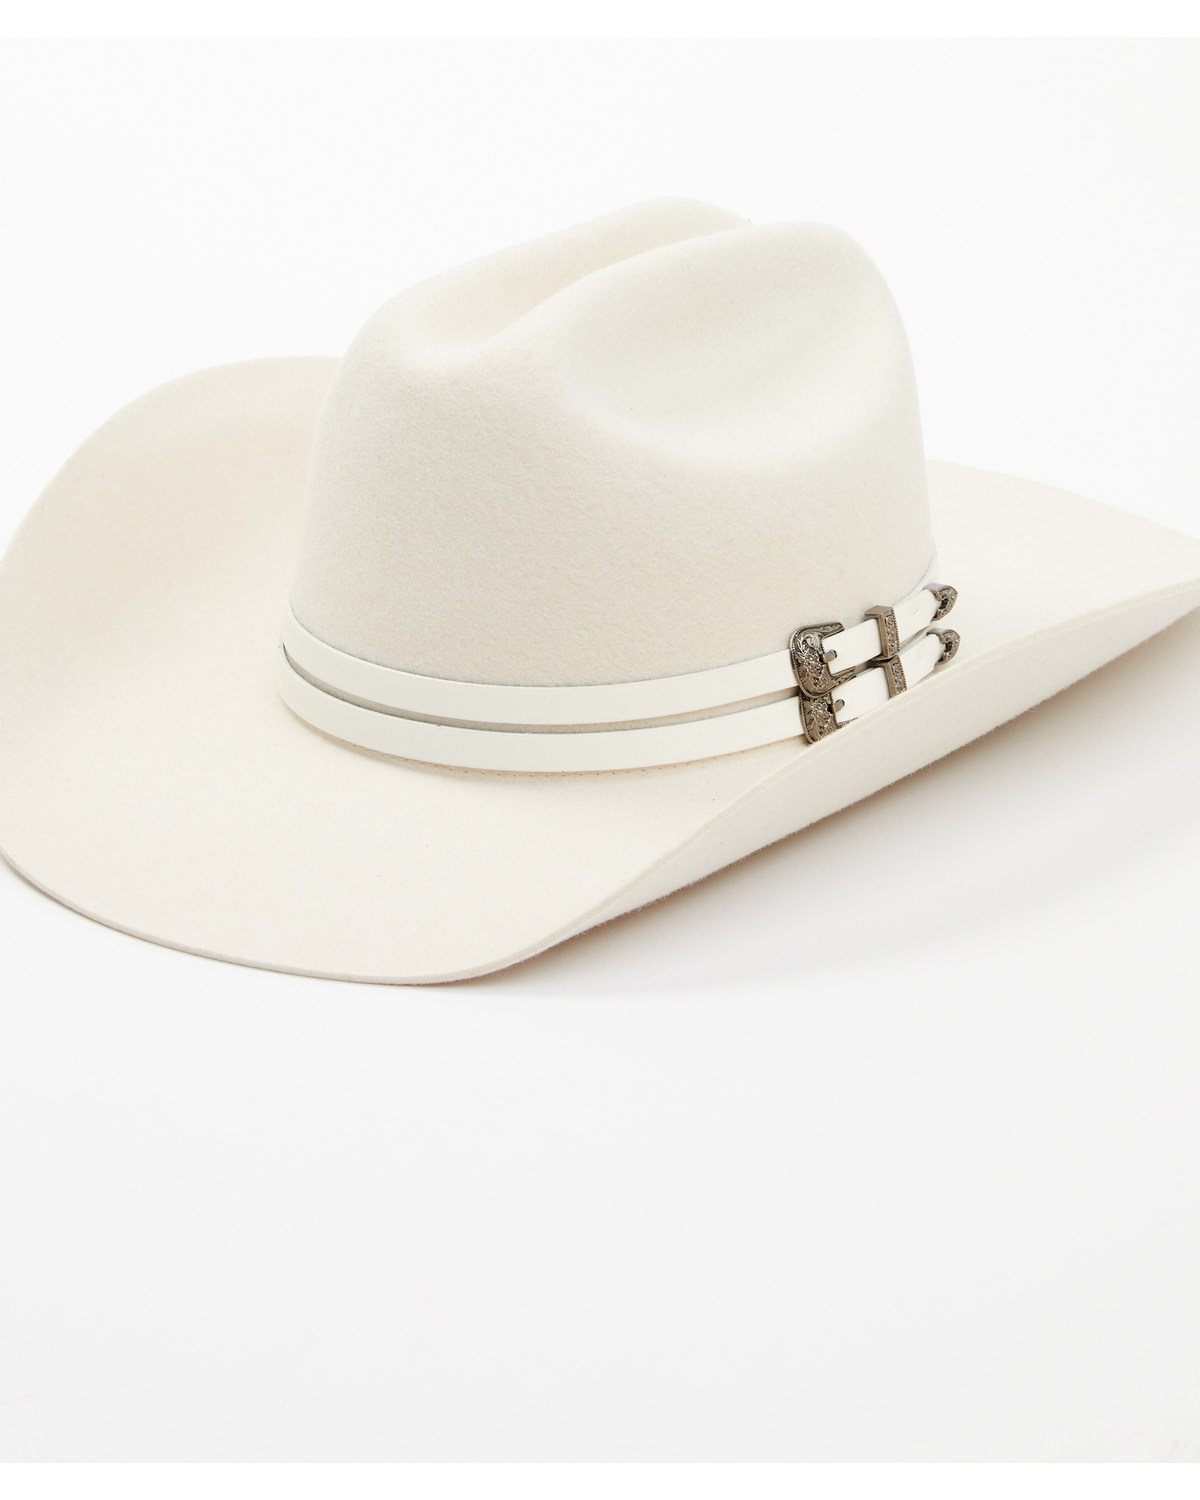 Idyllwind Women's Priscilla Felt Cowboy Hat